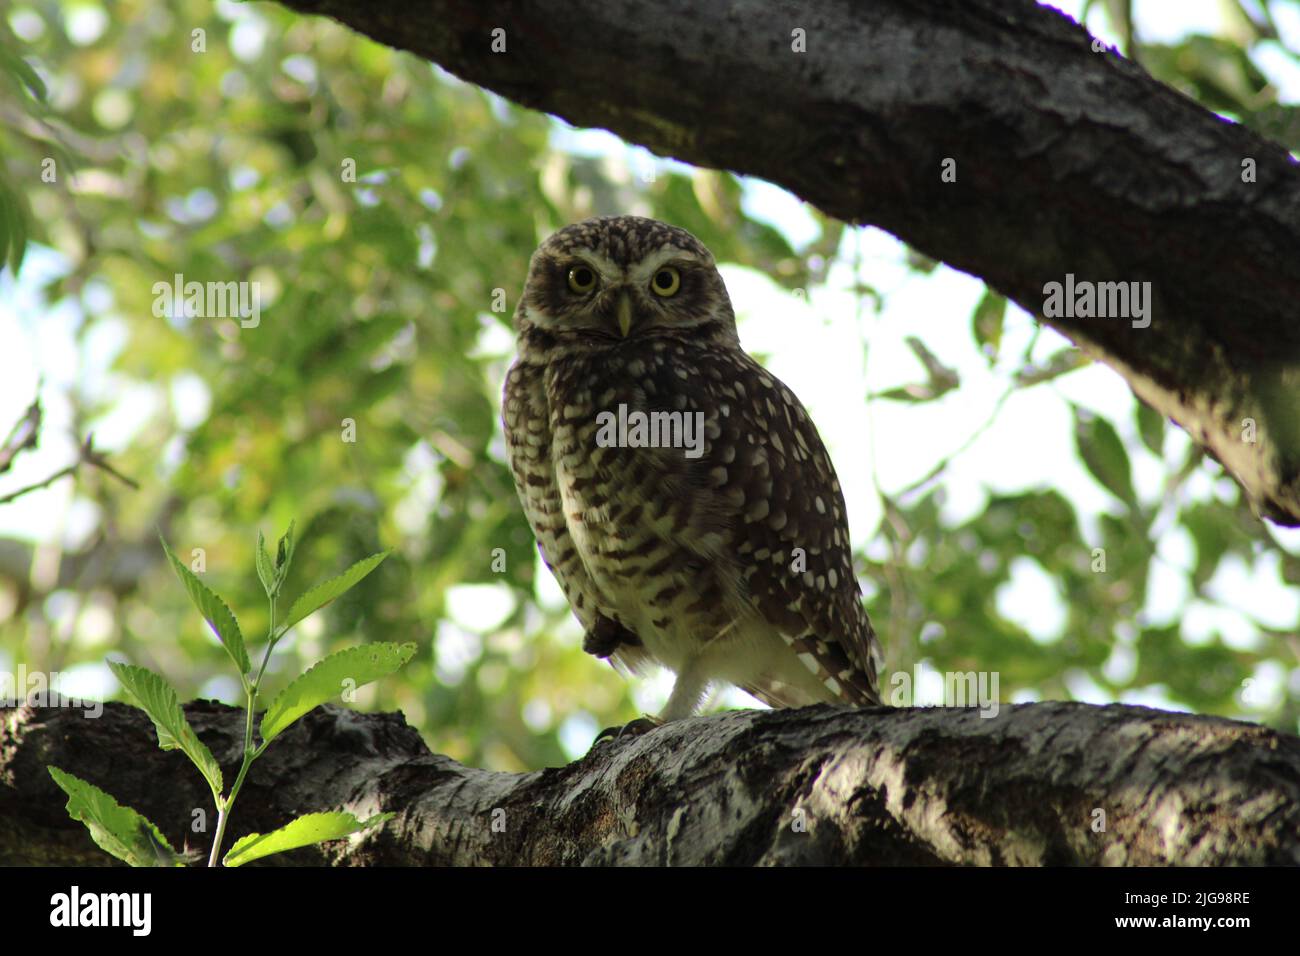 Owl on tree branch Stock Photo